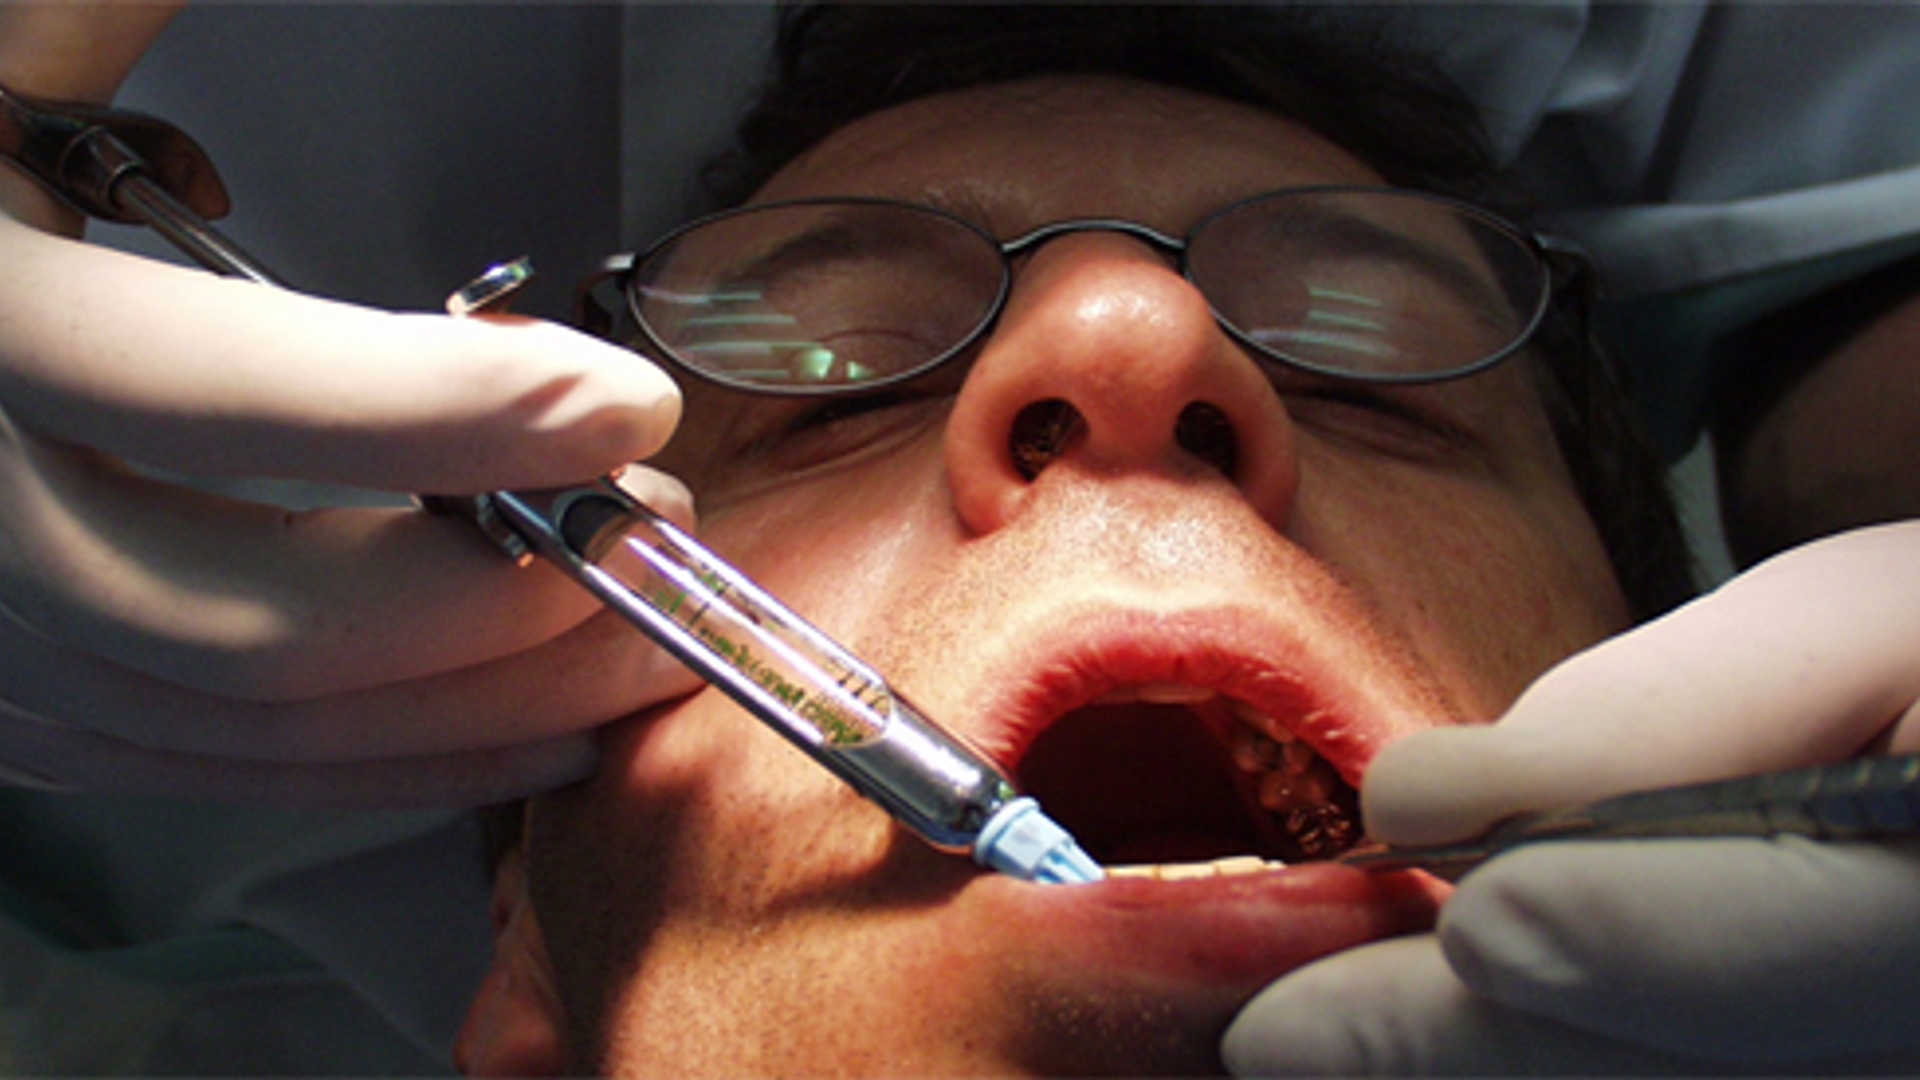 tandartsbehandeling2_07.jpg